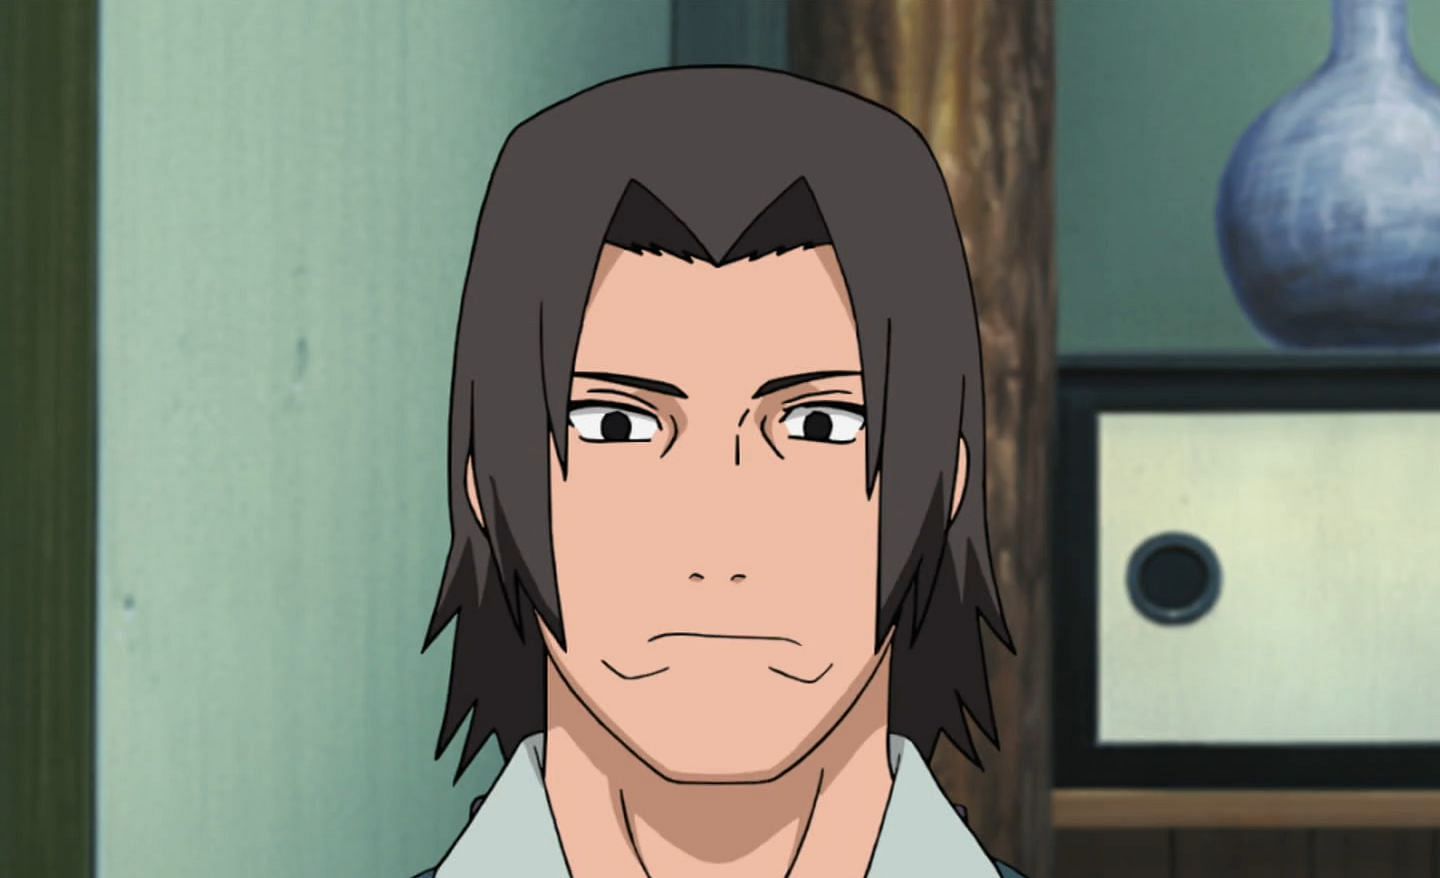 Fugaku Uchiha as seen in the anime Naruto (Image via Studio Pierrot)